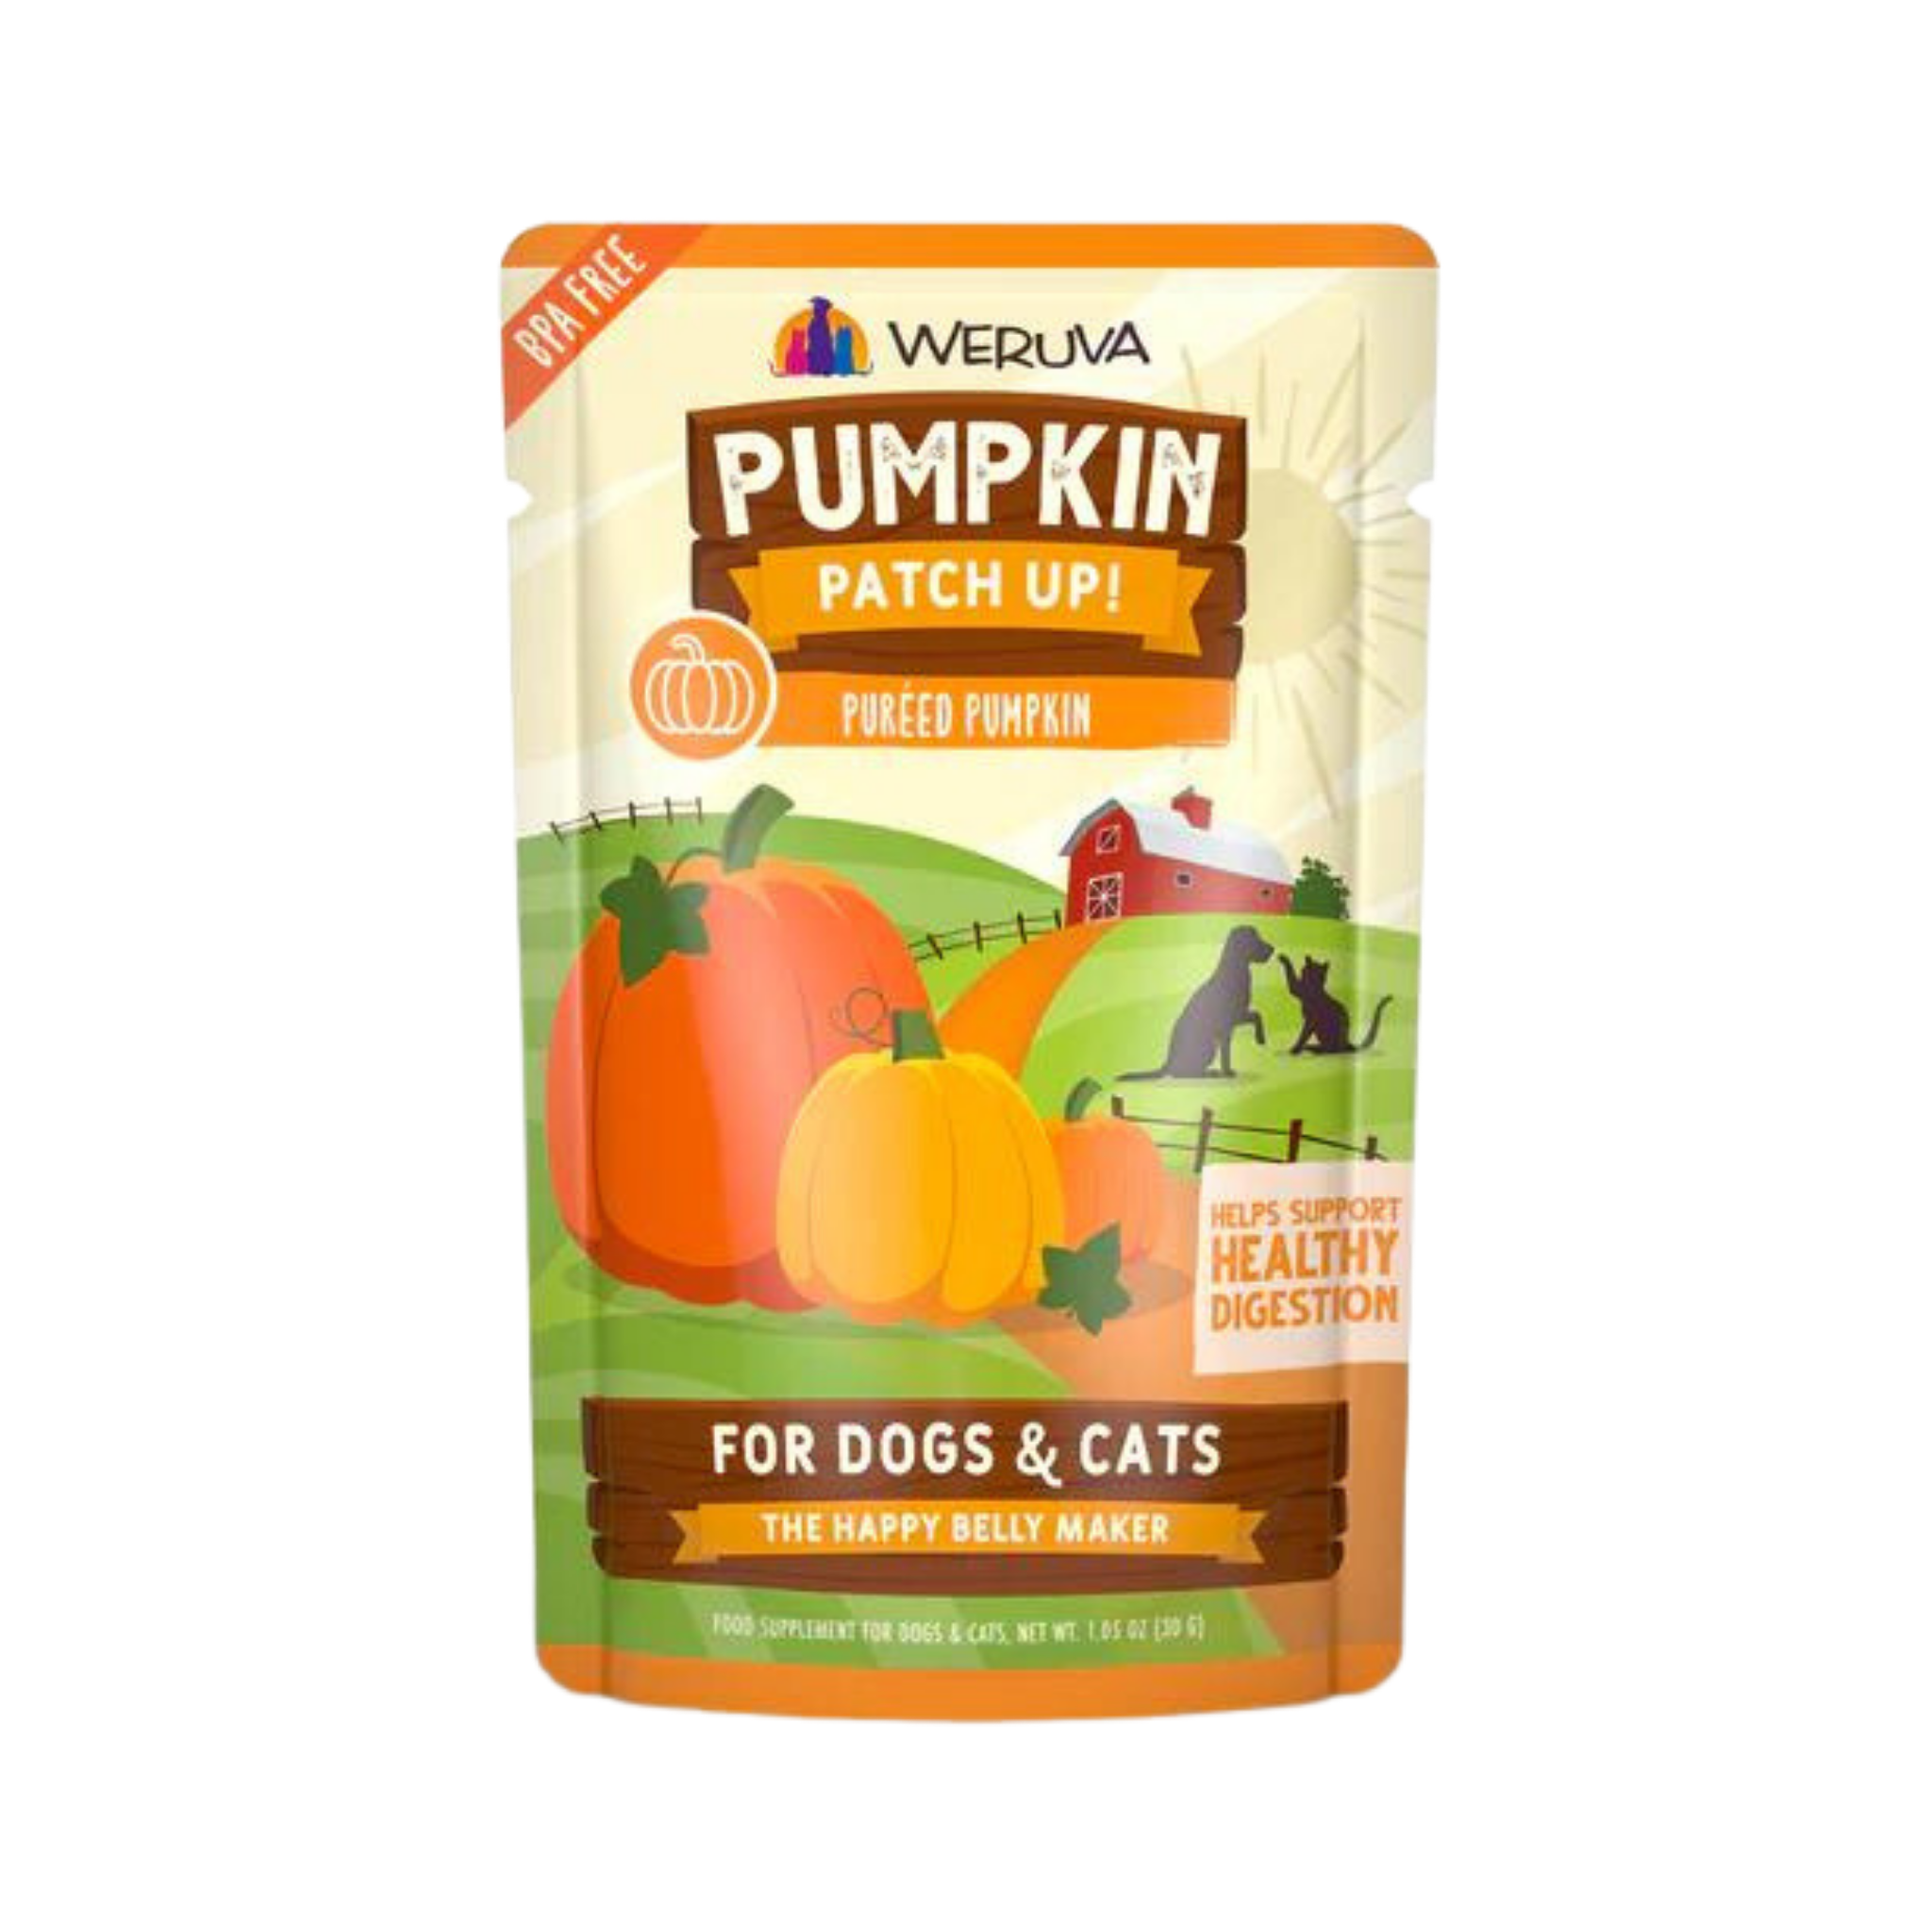 Weruva Pumpkin Patch Up Pureed Pumpkin Happy Belly Maker For Dogs & Cats